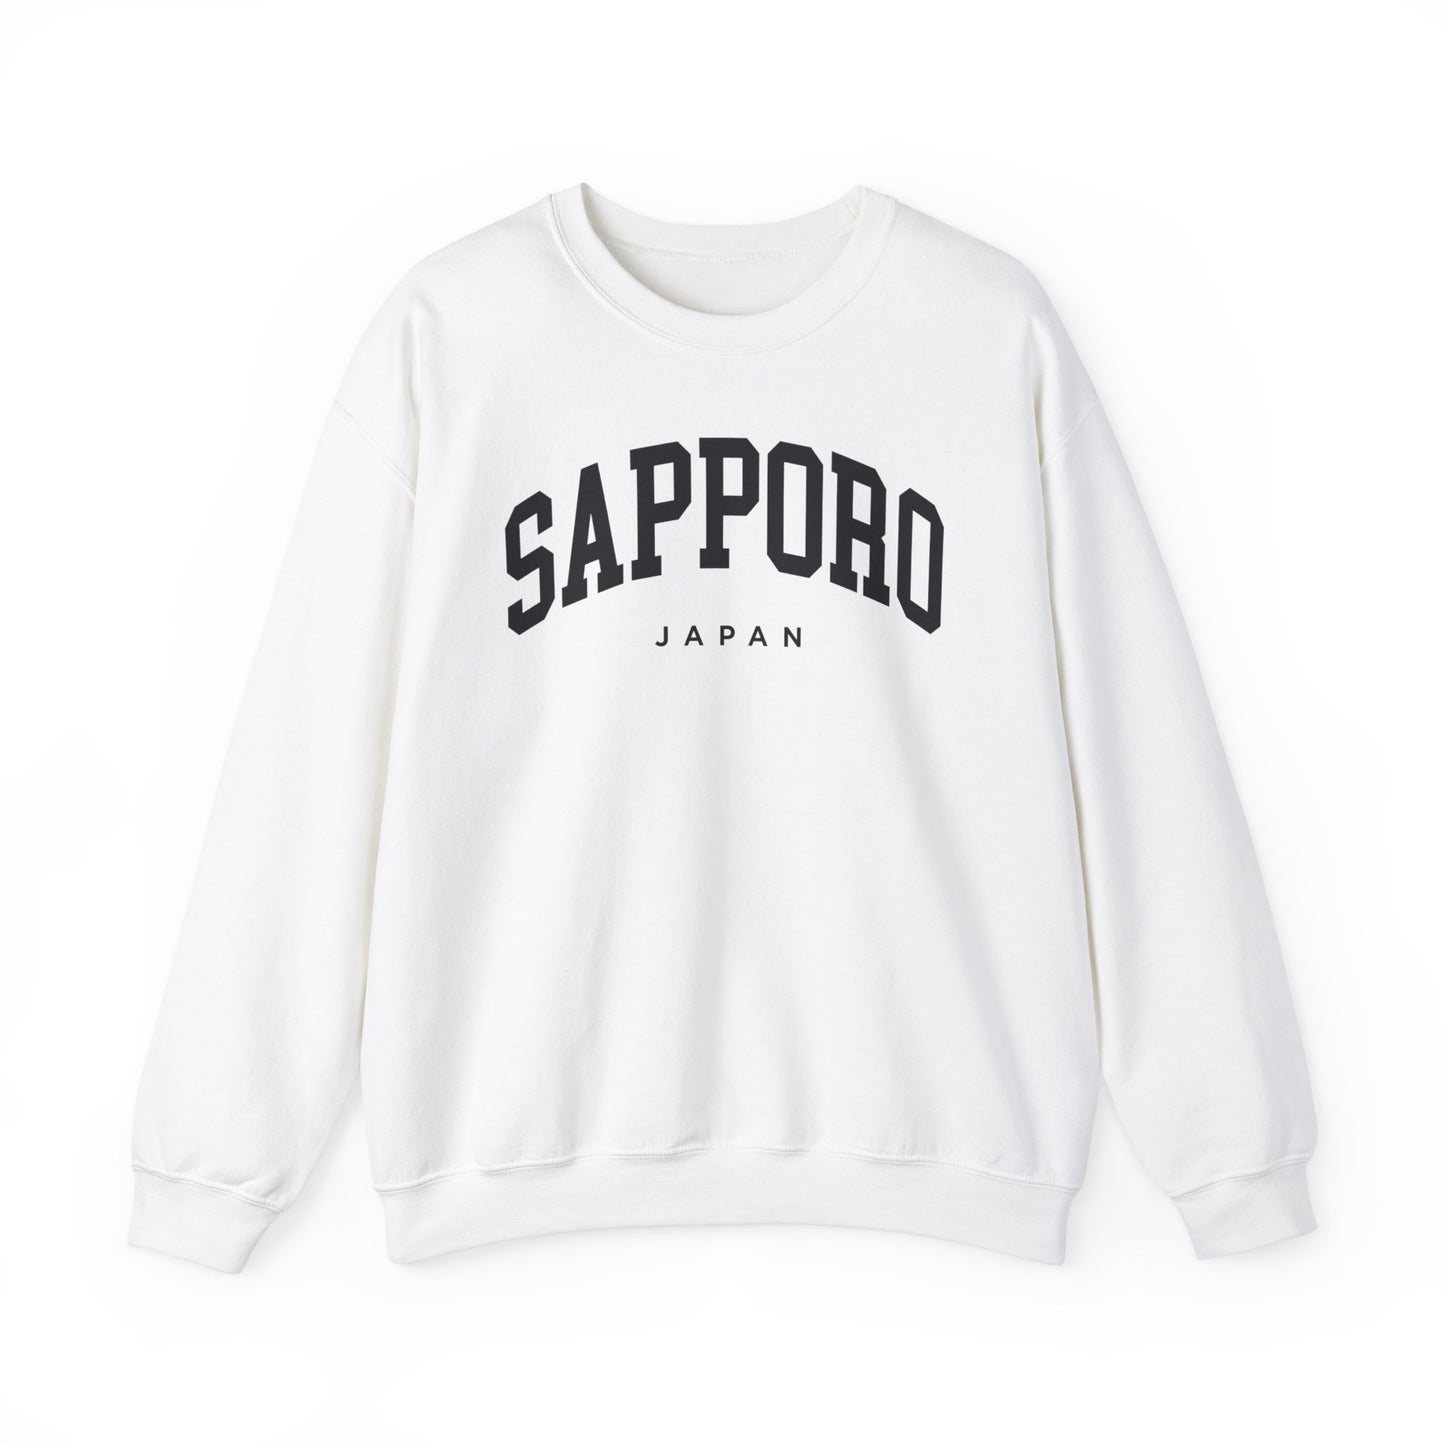 Sapporo Japan Sweatshirt